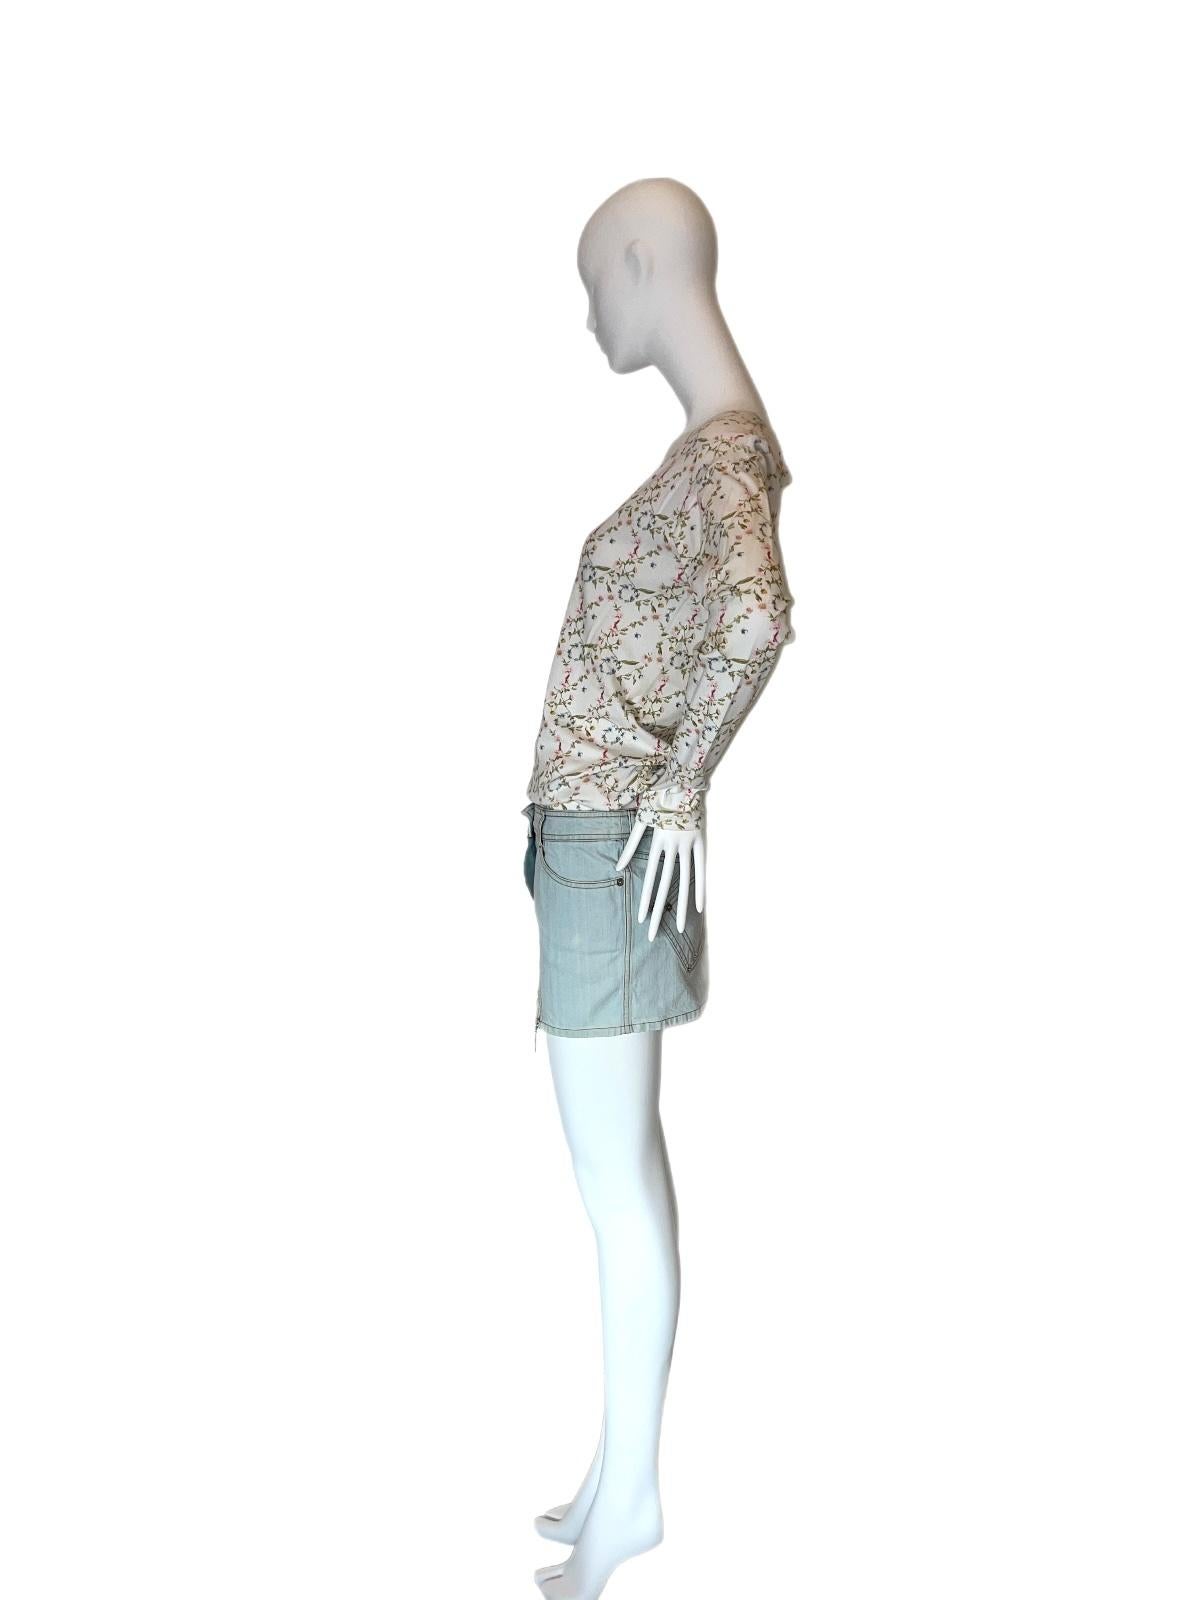 DIOR by JOHN GALLIANO 2005 runway vintage mini dress In Excellent Condition For Sale In Leonardo, NJ